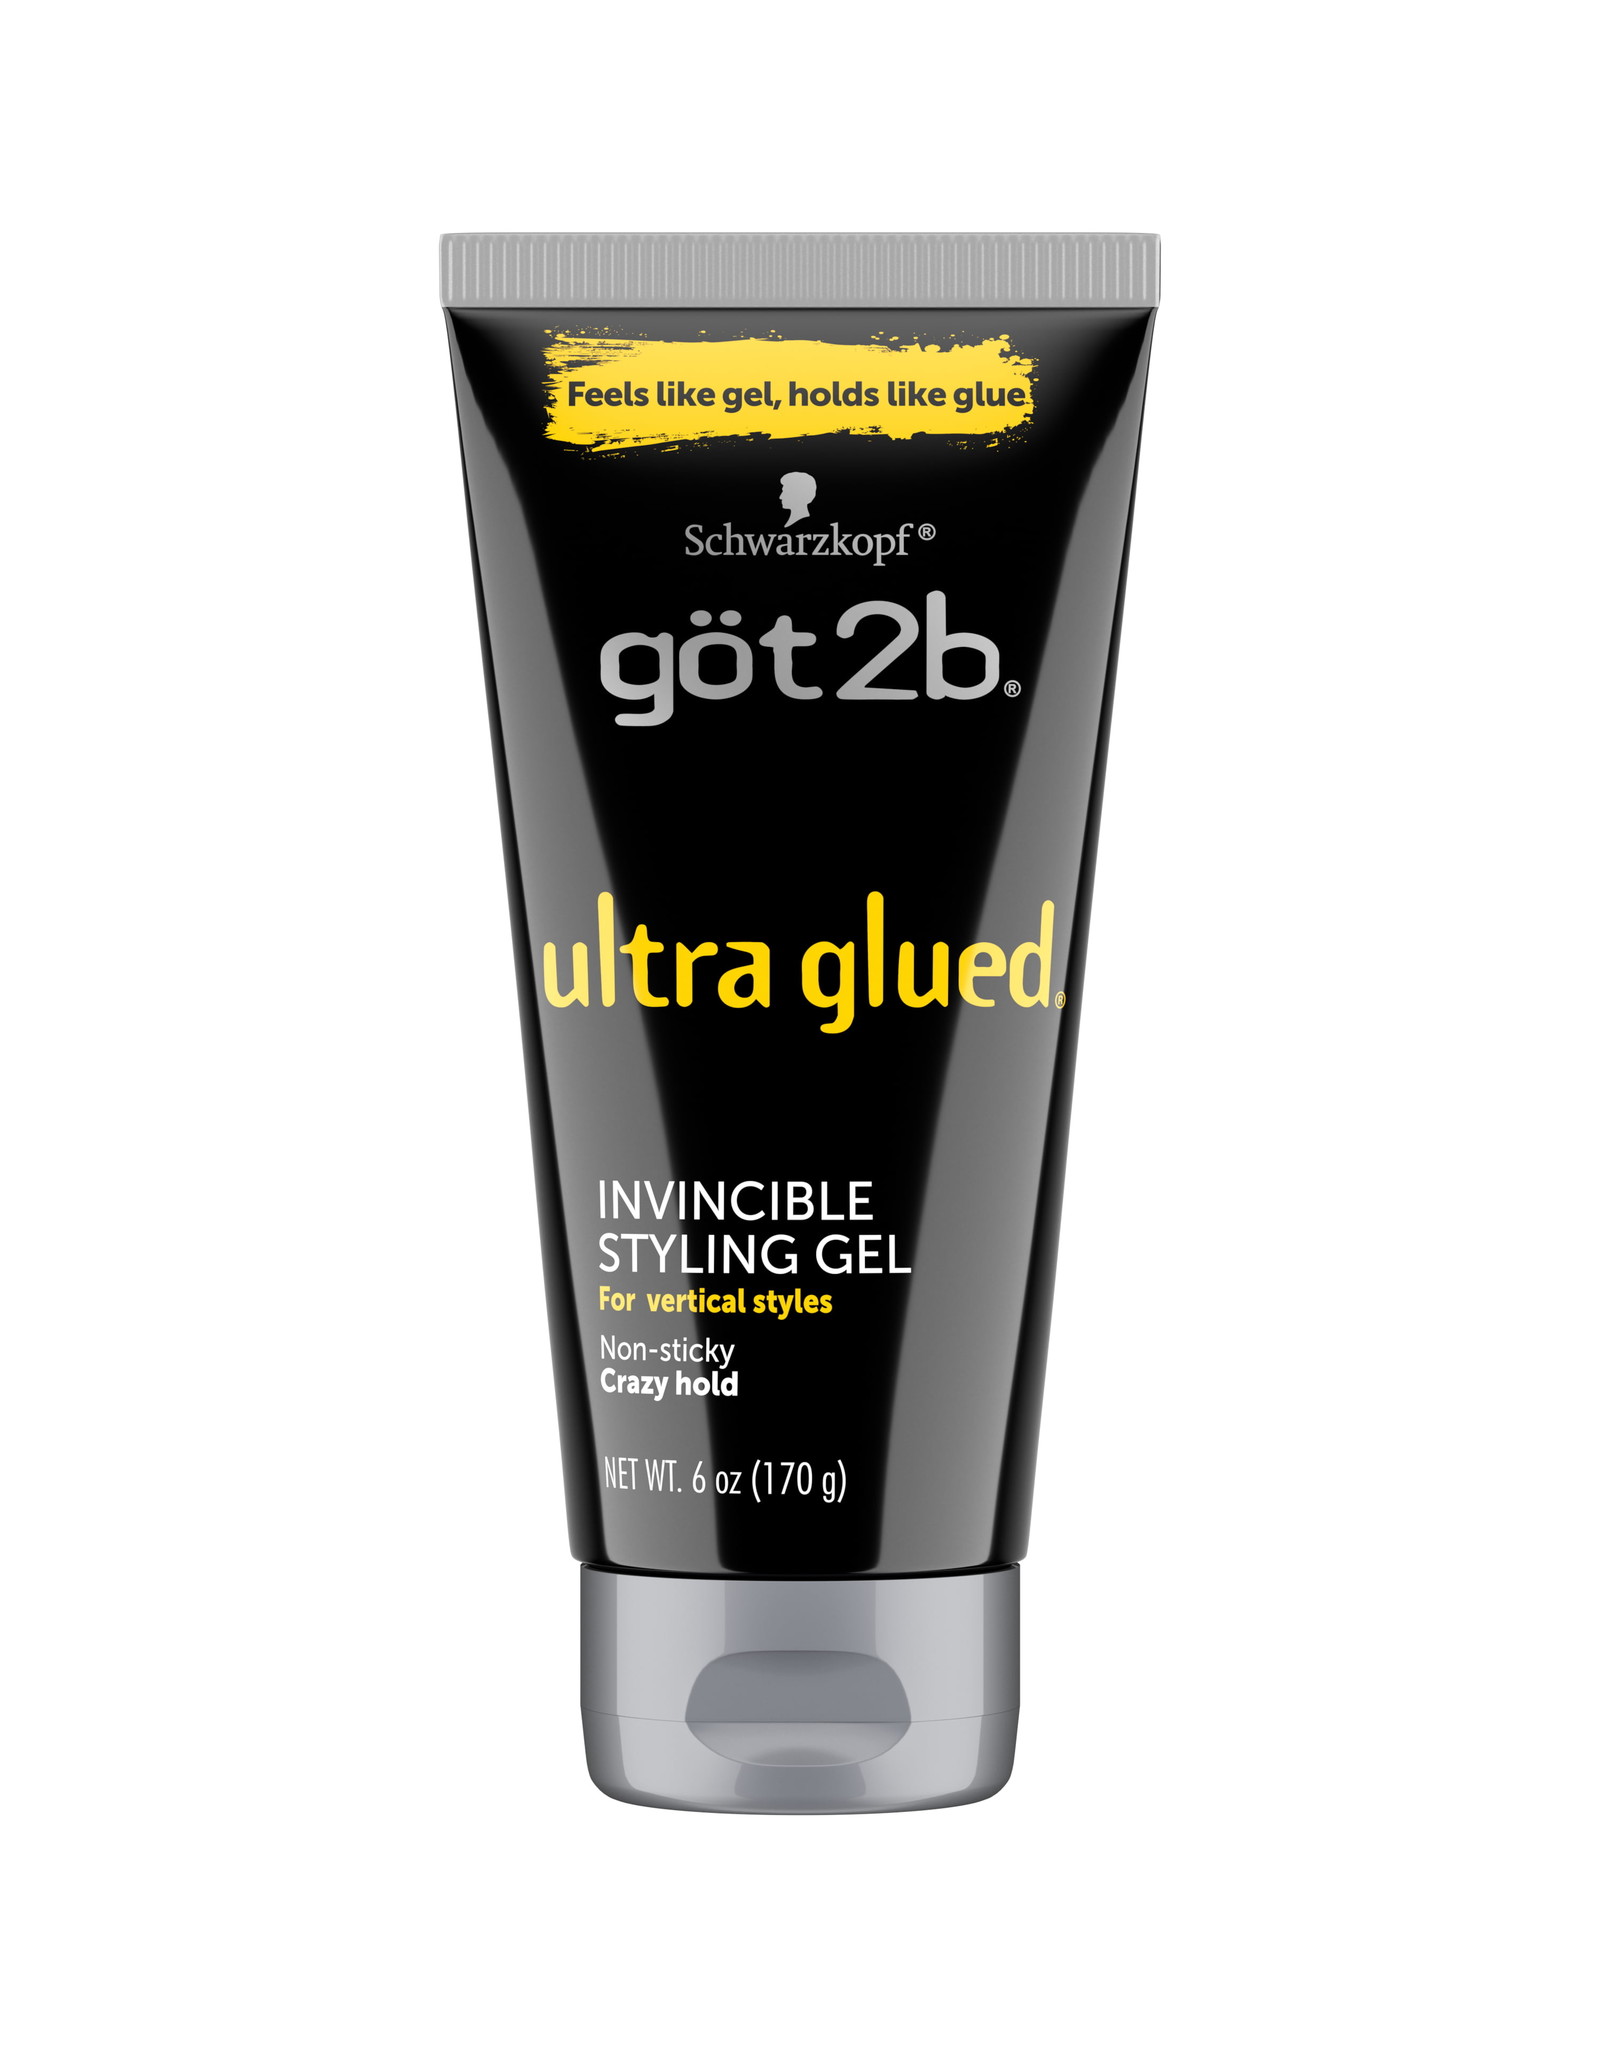 SCHWARZKOPF got2b ultra glued invincible styling gel 6 oz